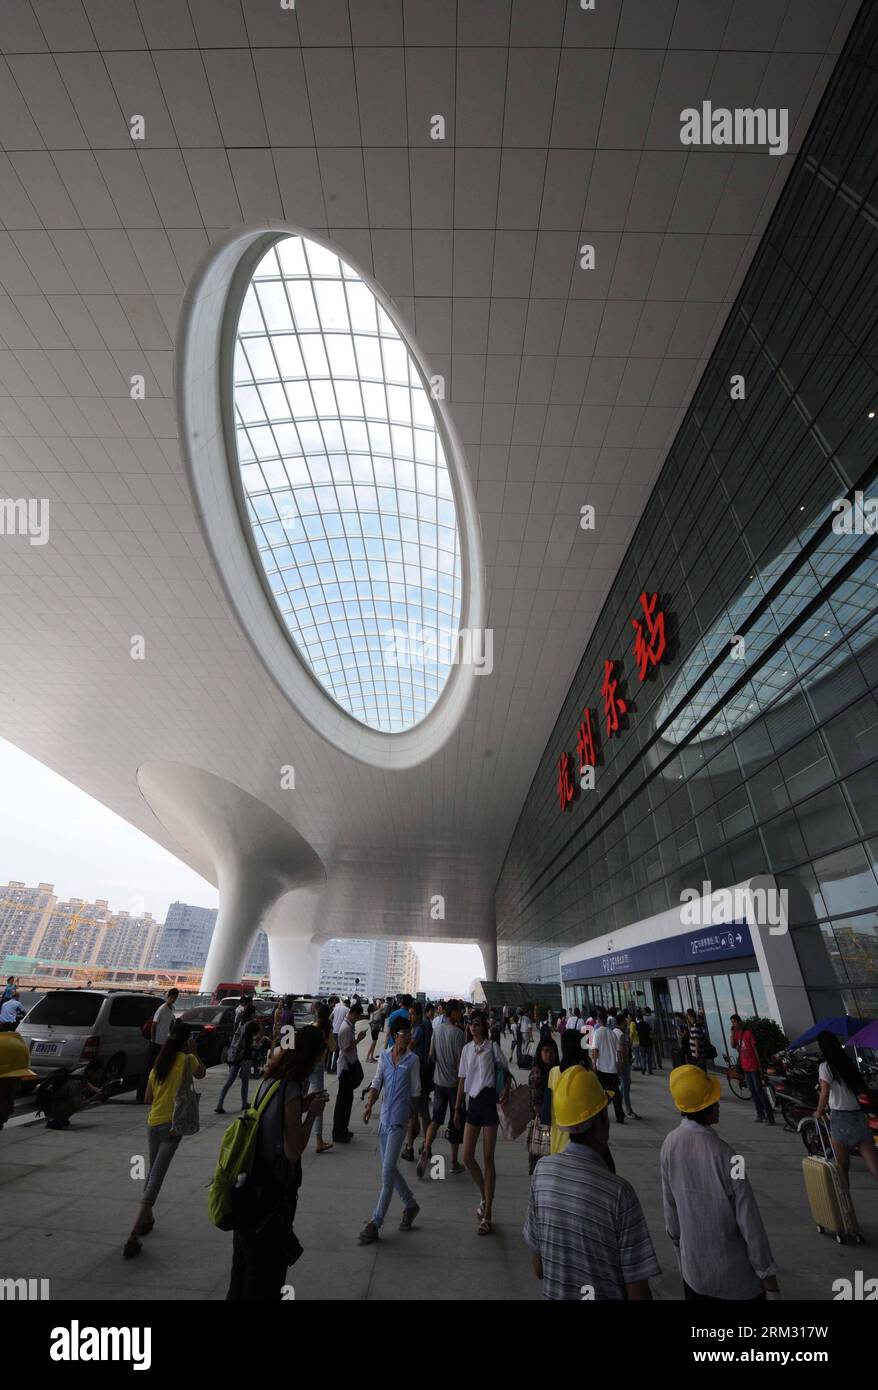 Bildnummer: 59925266  Datum: 01.07.2013  Copyright: imago/Xinhua (130701) -- HANGZHOU, July 1, 2013 (Xinhua) -- Passengers are seen at the newly-opened Hangzhou East Station in Hangzhou, capital of east China s Zhejiang Province, July 1, 2013. With the building area of 1.13 million square meters, the Hangzhou East Station, China s largest railway terminal, officially opened on Monday. (Xinhua/Zhu Yinwei) (zwx) CHINA-ZHEJIANG-HANGZHOU-EAST STATION-OPENING (CN) PUBLICATIONxNOTxINxCHN Wirtschaft Gesellschaft Verkehr Bahn Bahnhof Eröffnung Gebäude Fotostory jh x0x premiumd 2013 hoch      59925266 Stock Photo